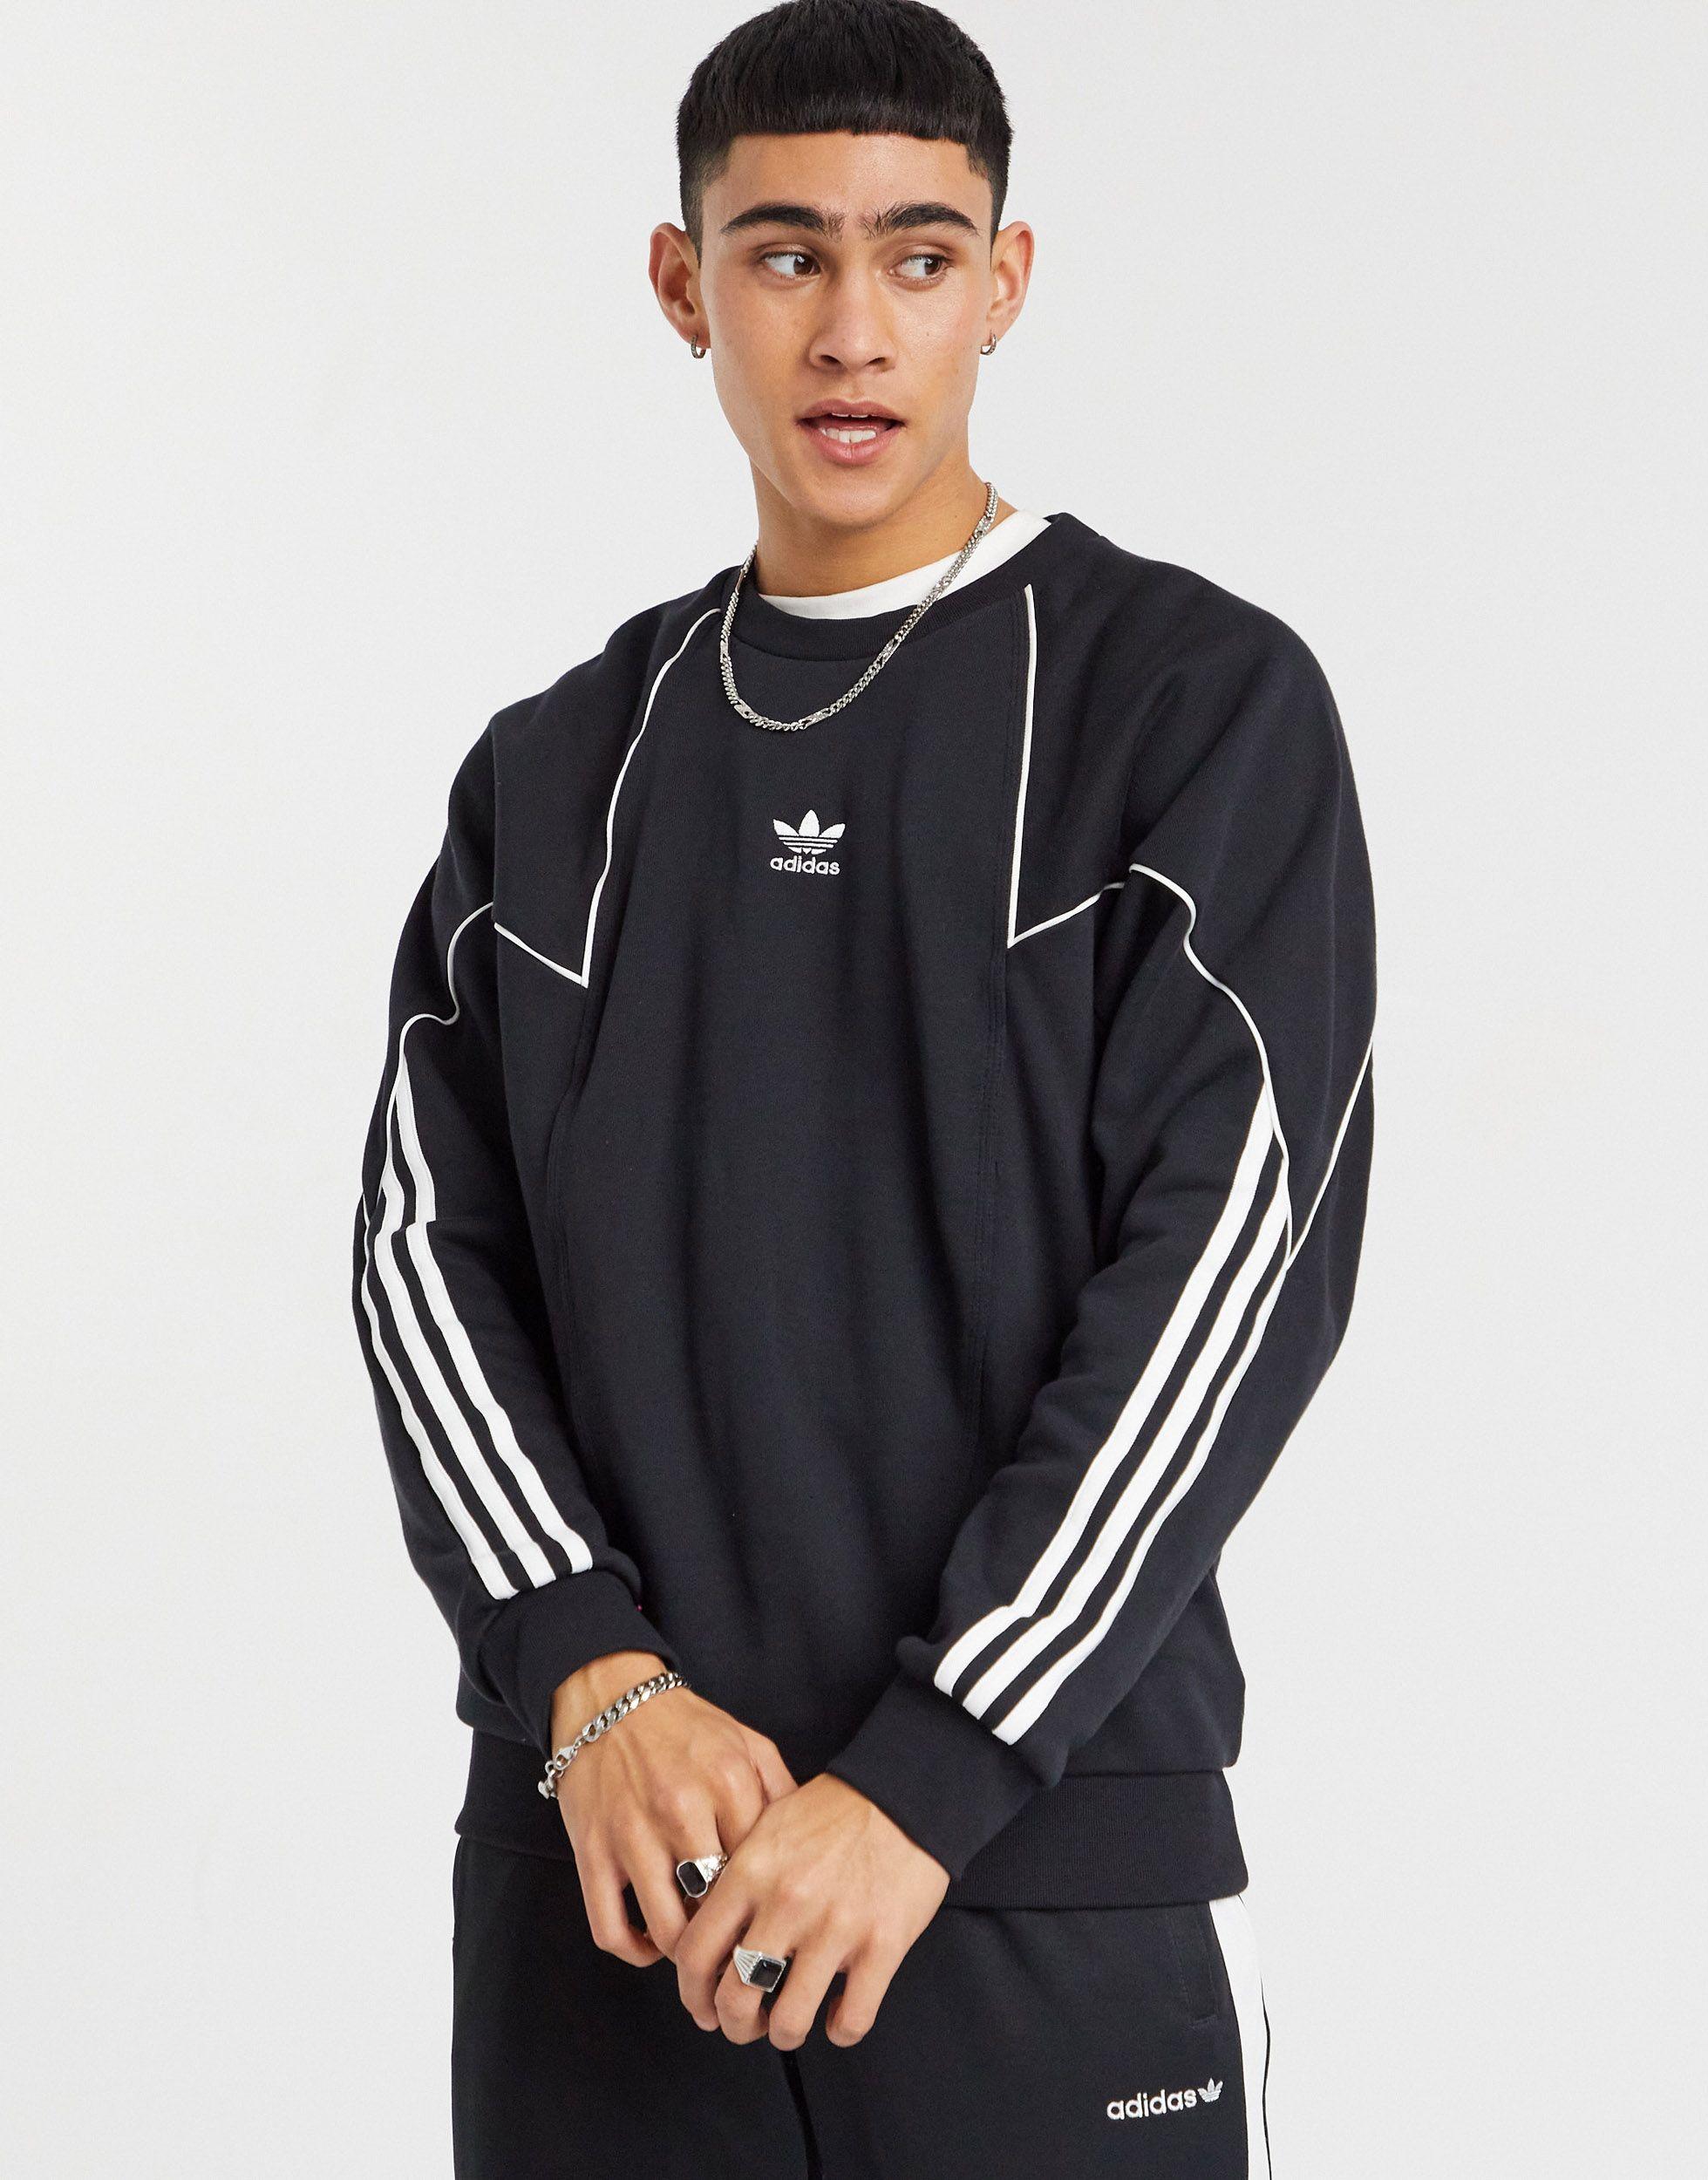 adidas Originals Sweatshirt With Central Trefoil Logo in Black for Men -  Lyst